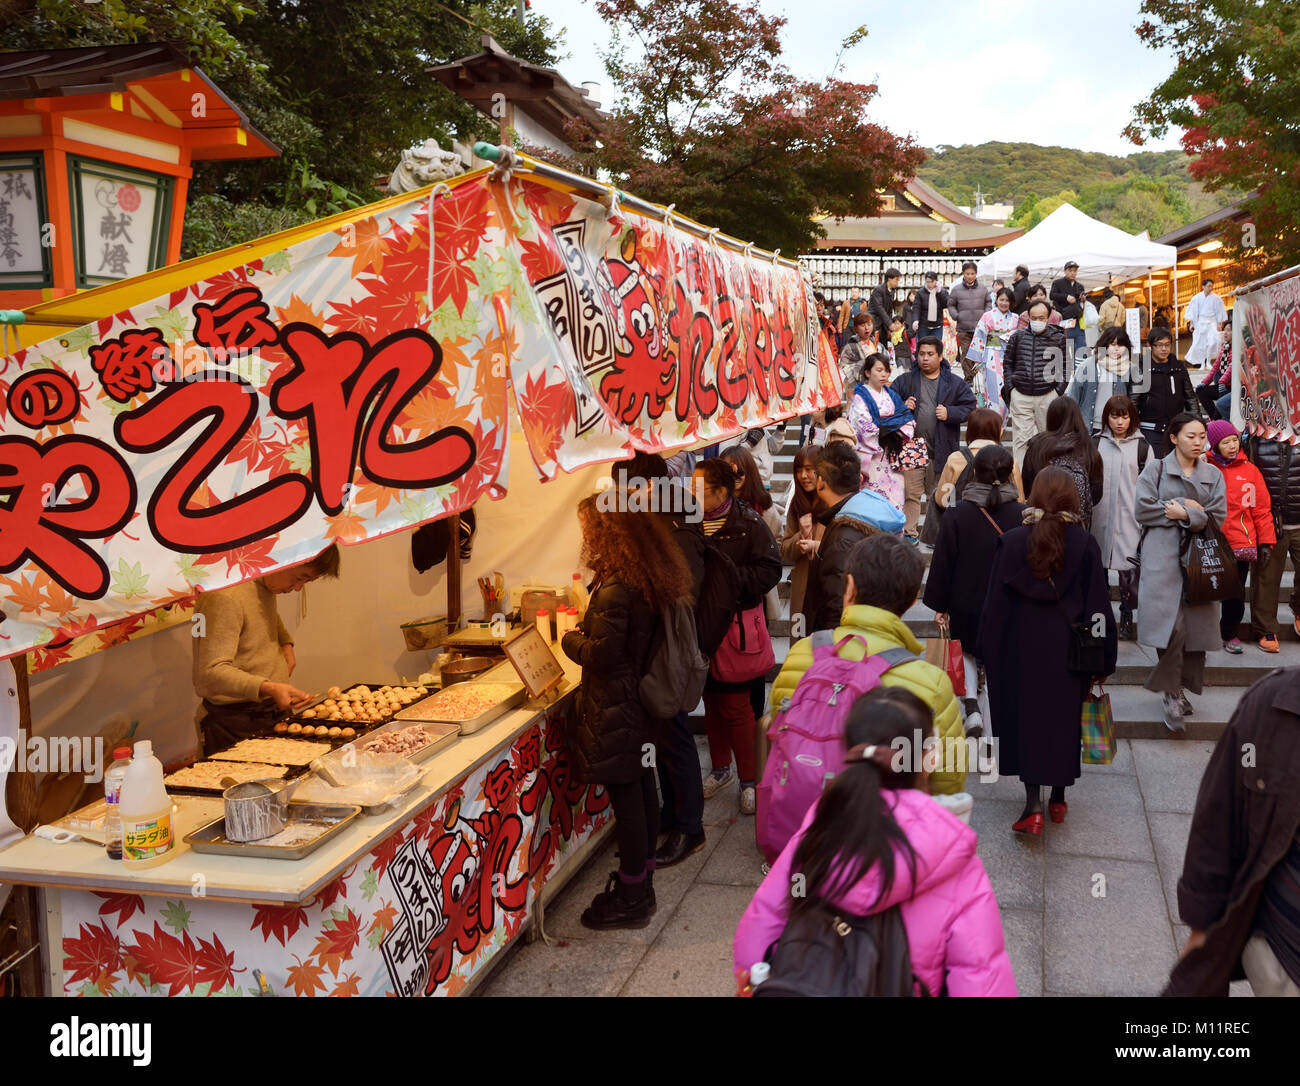 Takoyaki, grilled octopus, food stand at a street food market near Yasaka-jinja shrine in Gion district, Kyoto, Japan 2017 Stock Photo